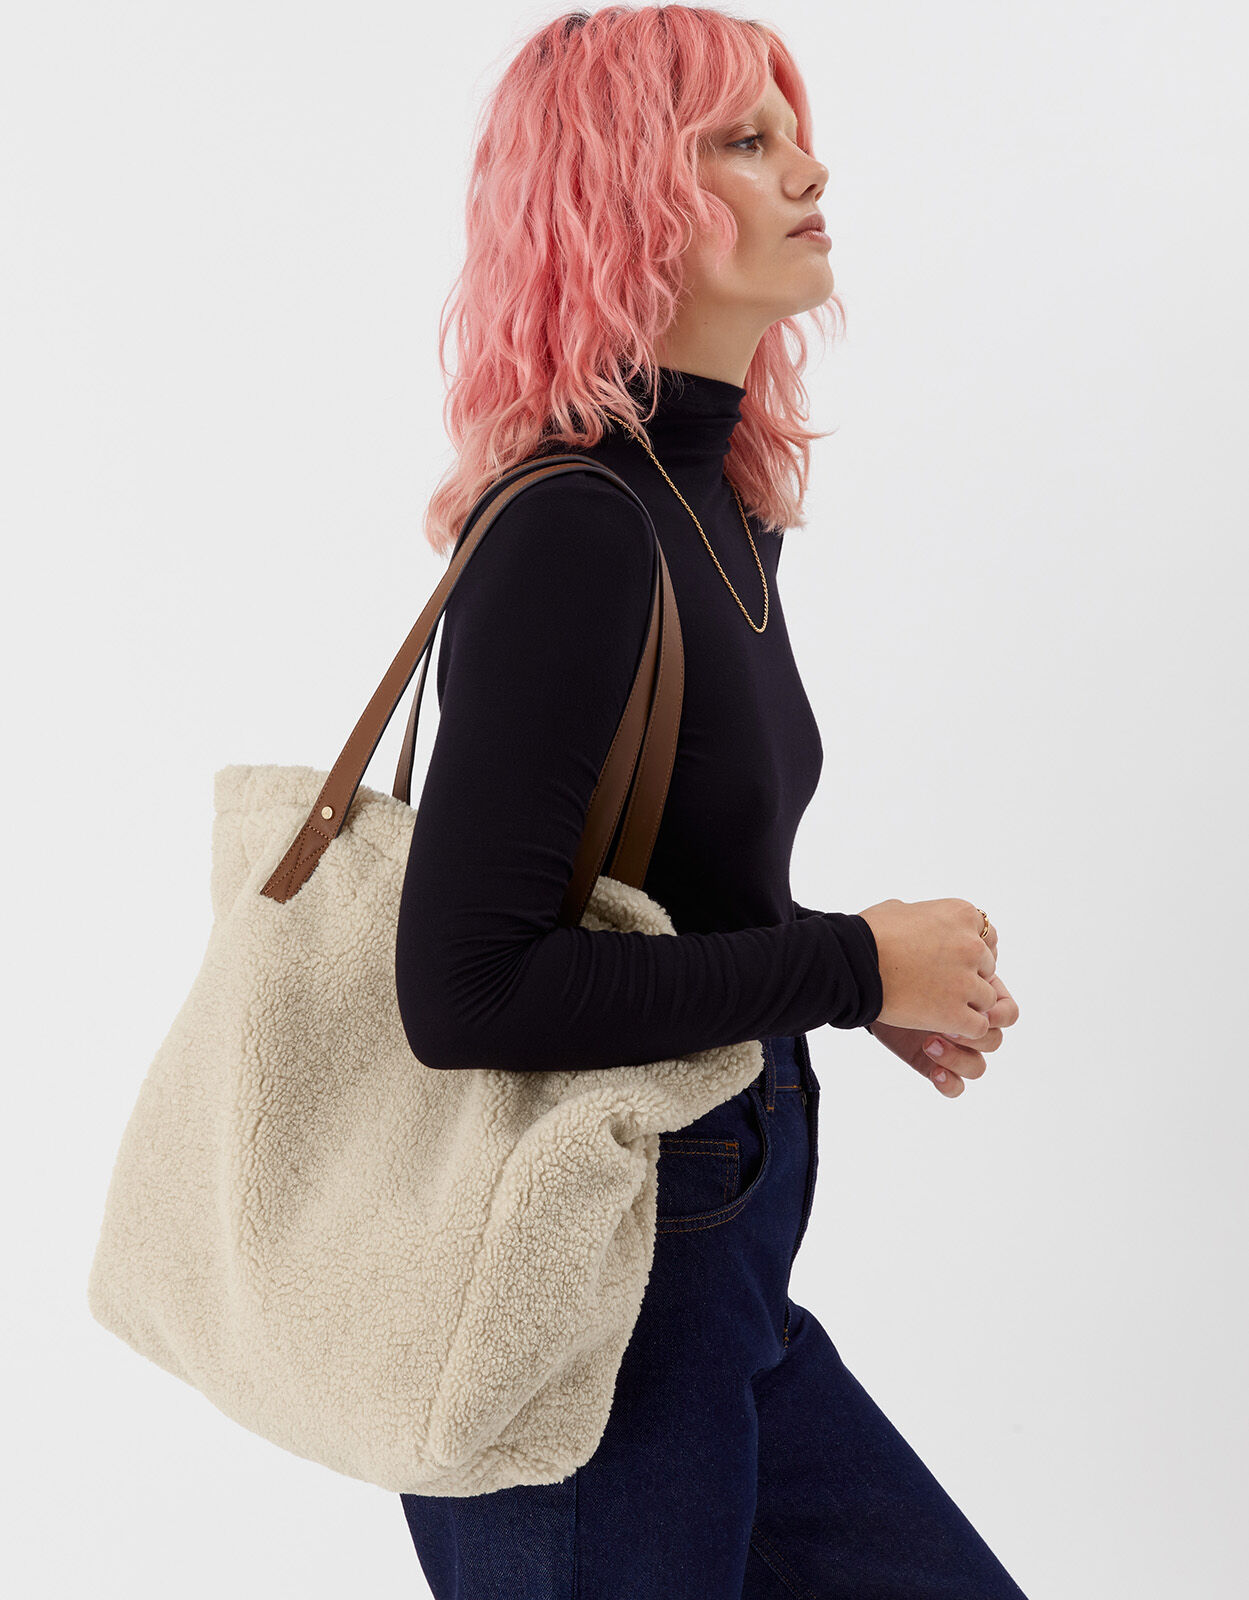 Nozze Accessori Borse e borsette Handmade Designer Texture Shine Black Handbag Fashion Leather Bag Shoulder Bag Leather Tote Bag For Women's Same As Picture Donna Tote Bag 